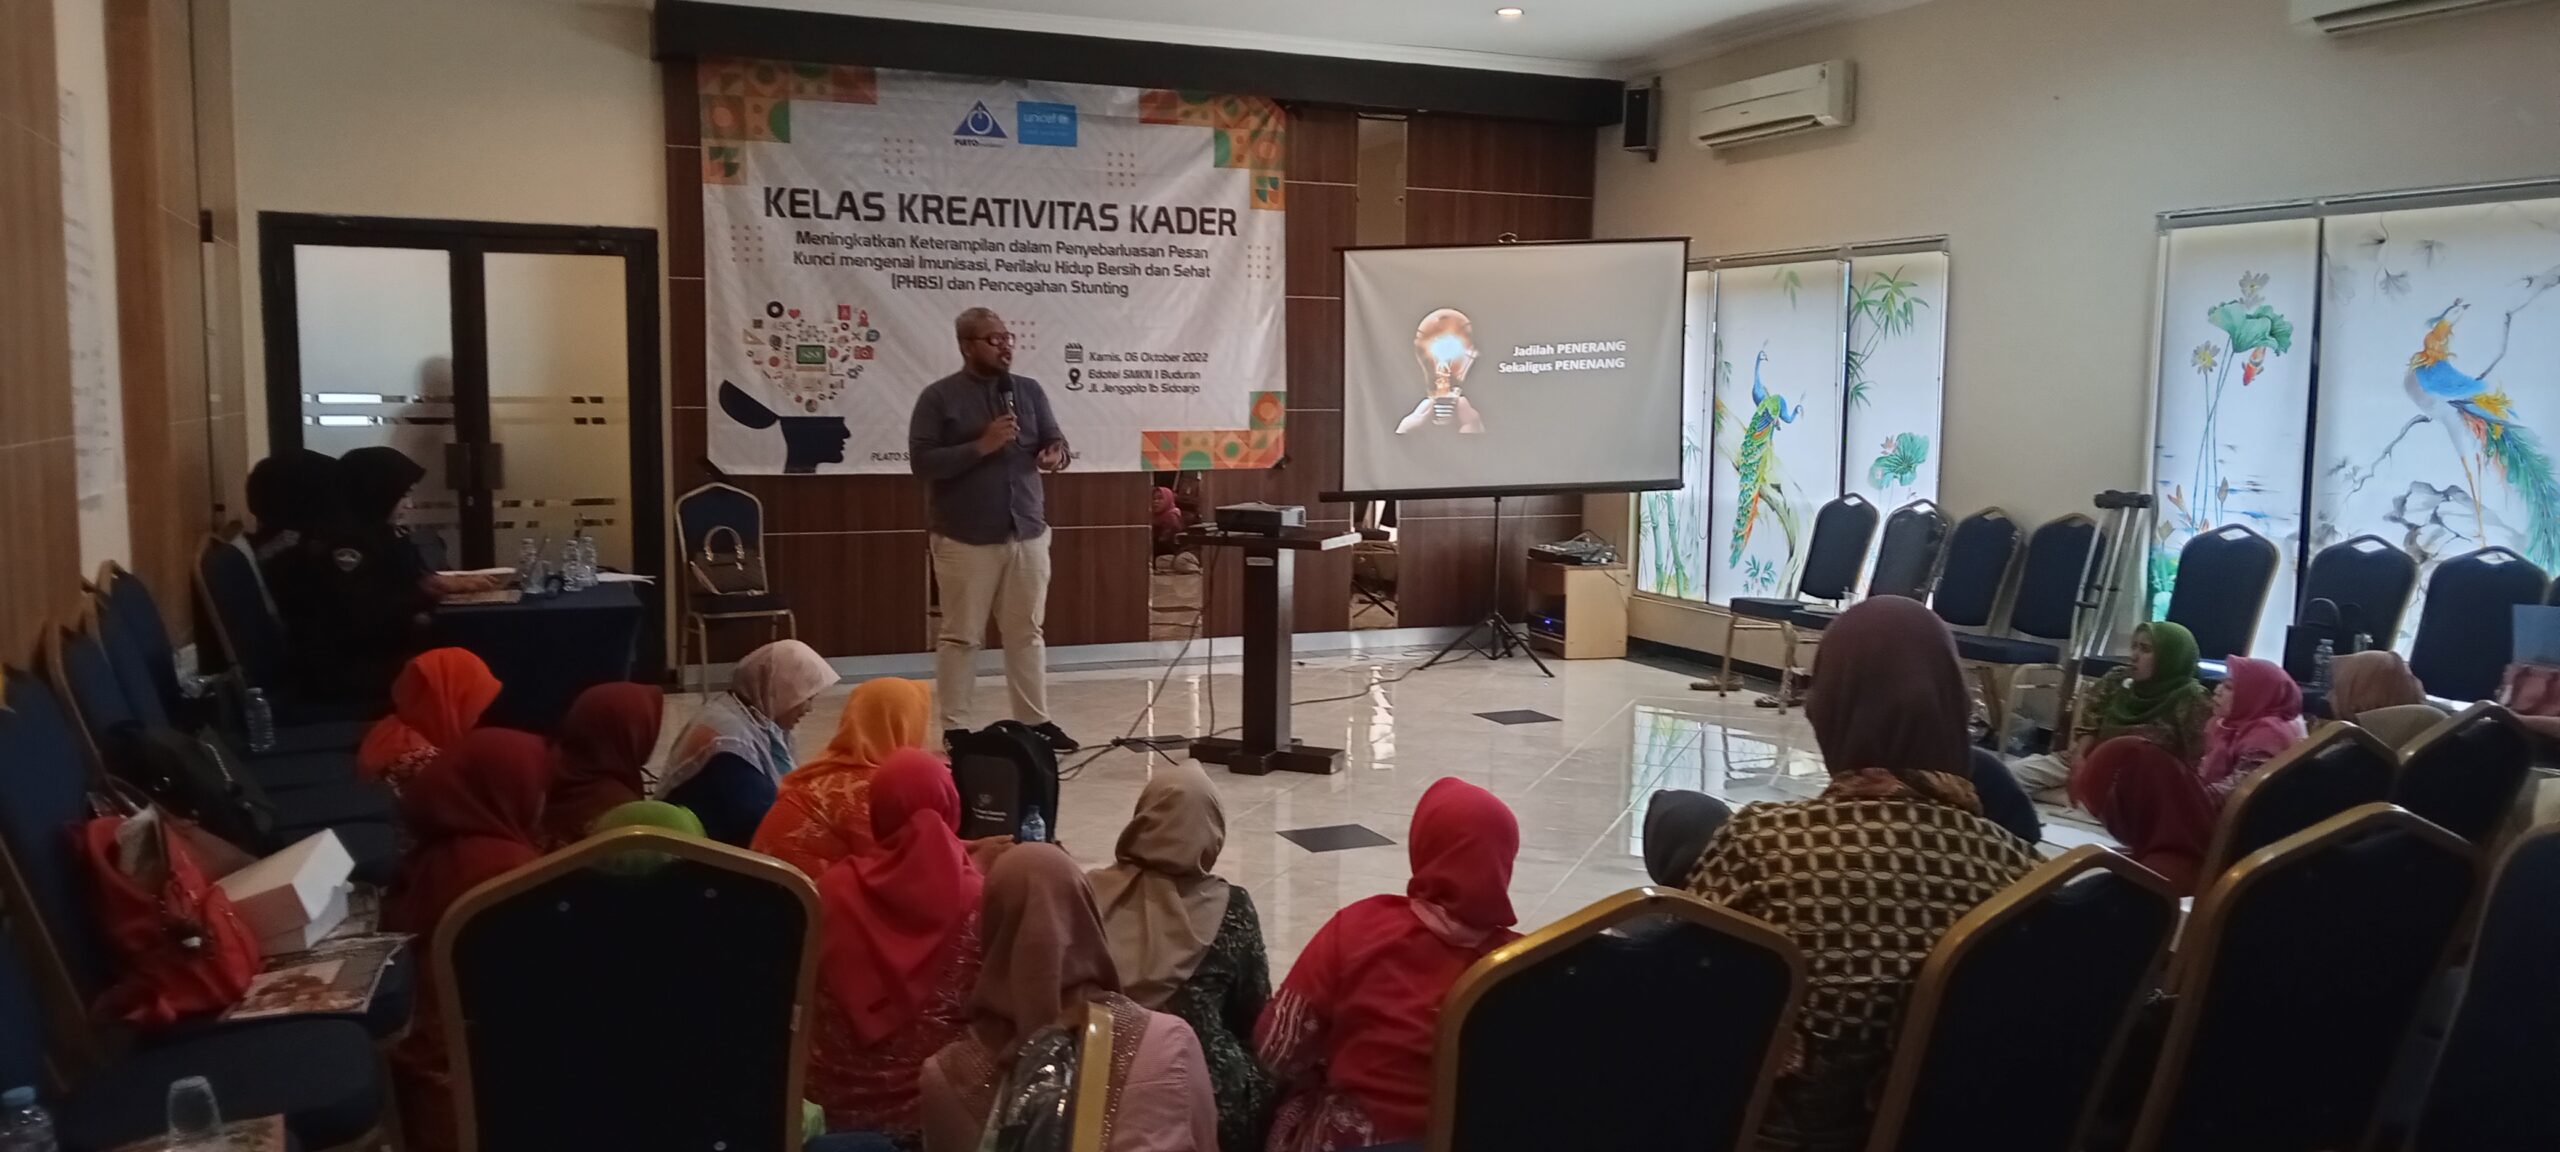 Yayasan Plato Bersama Dengan UNICEF Selenggarakan "Kelas Kreativitas Kader" Kabupaten Sidoarjo